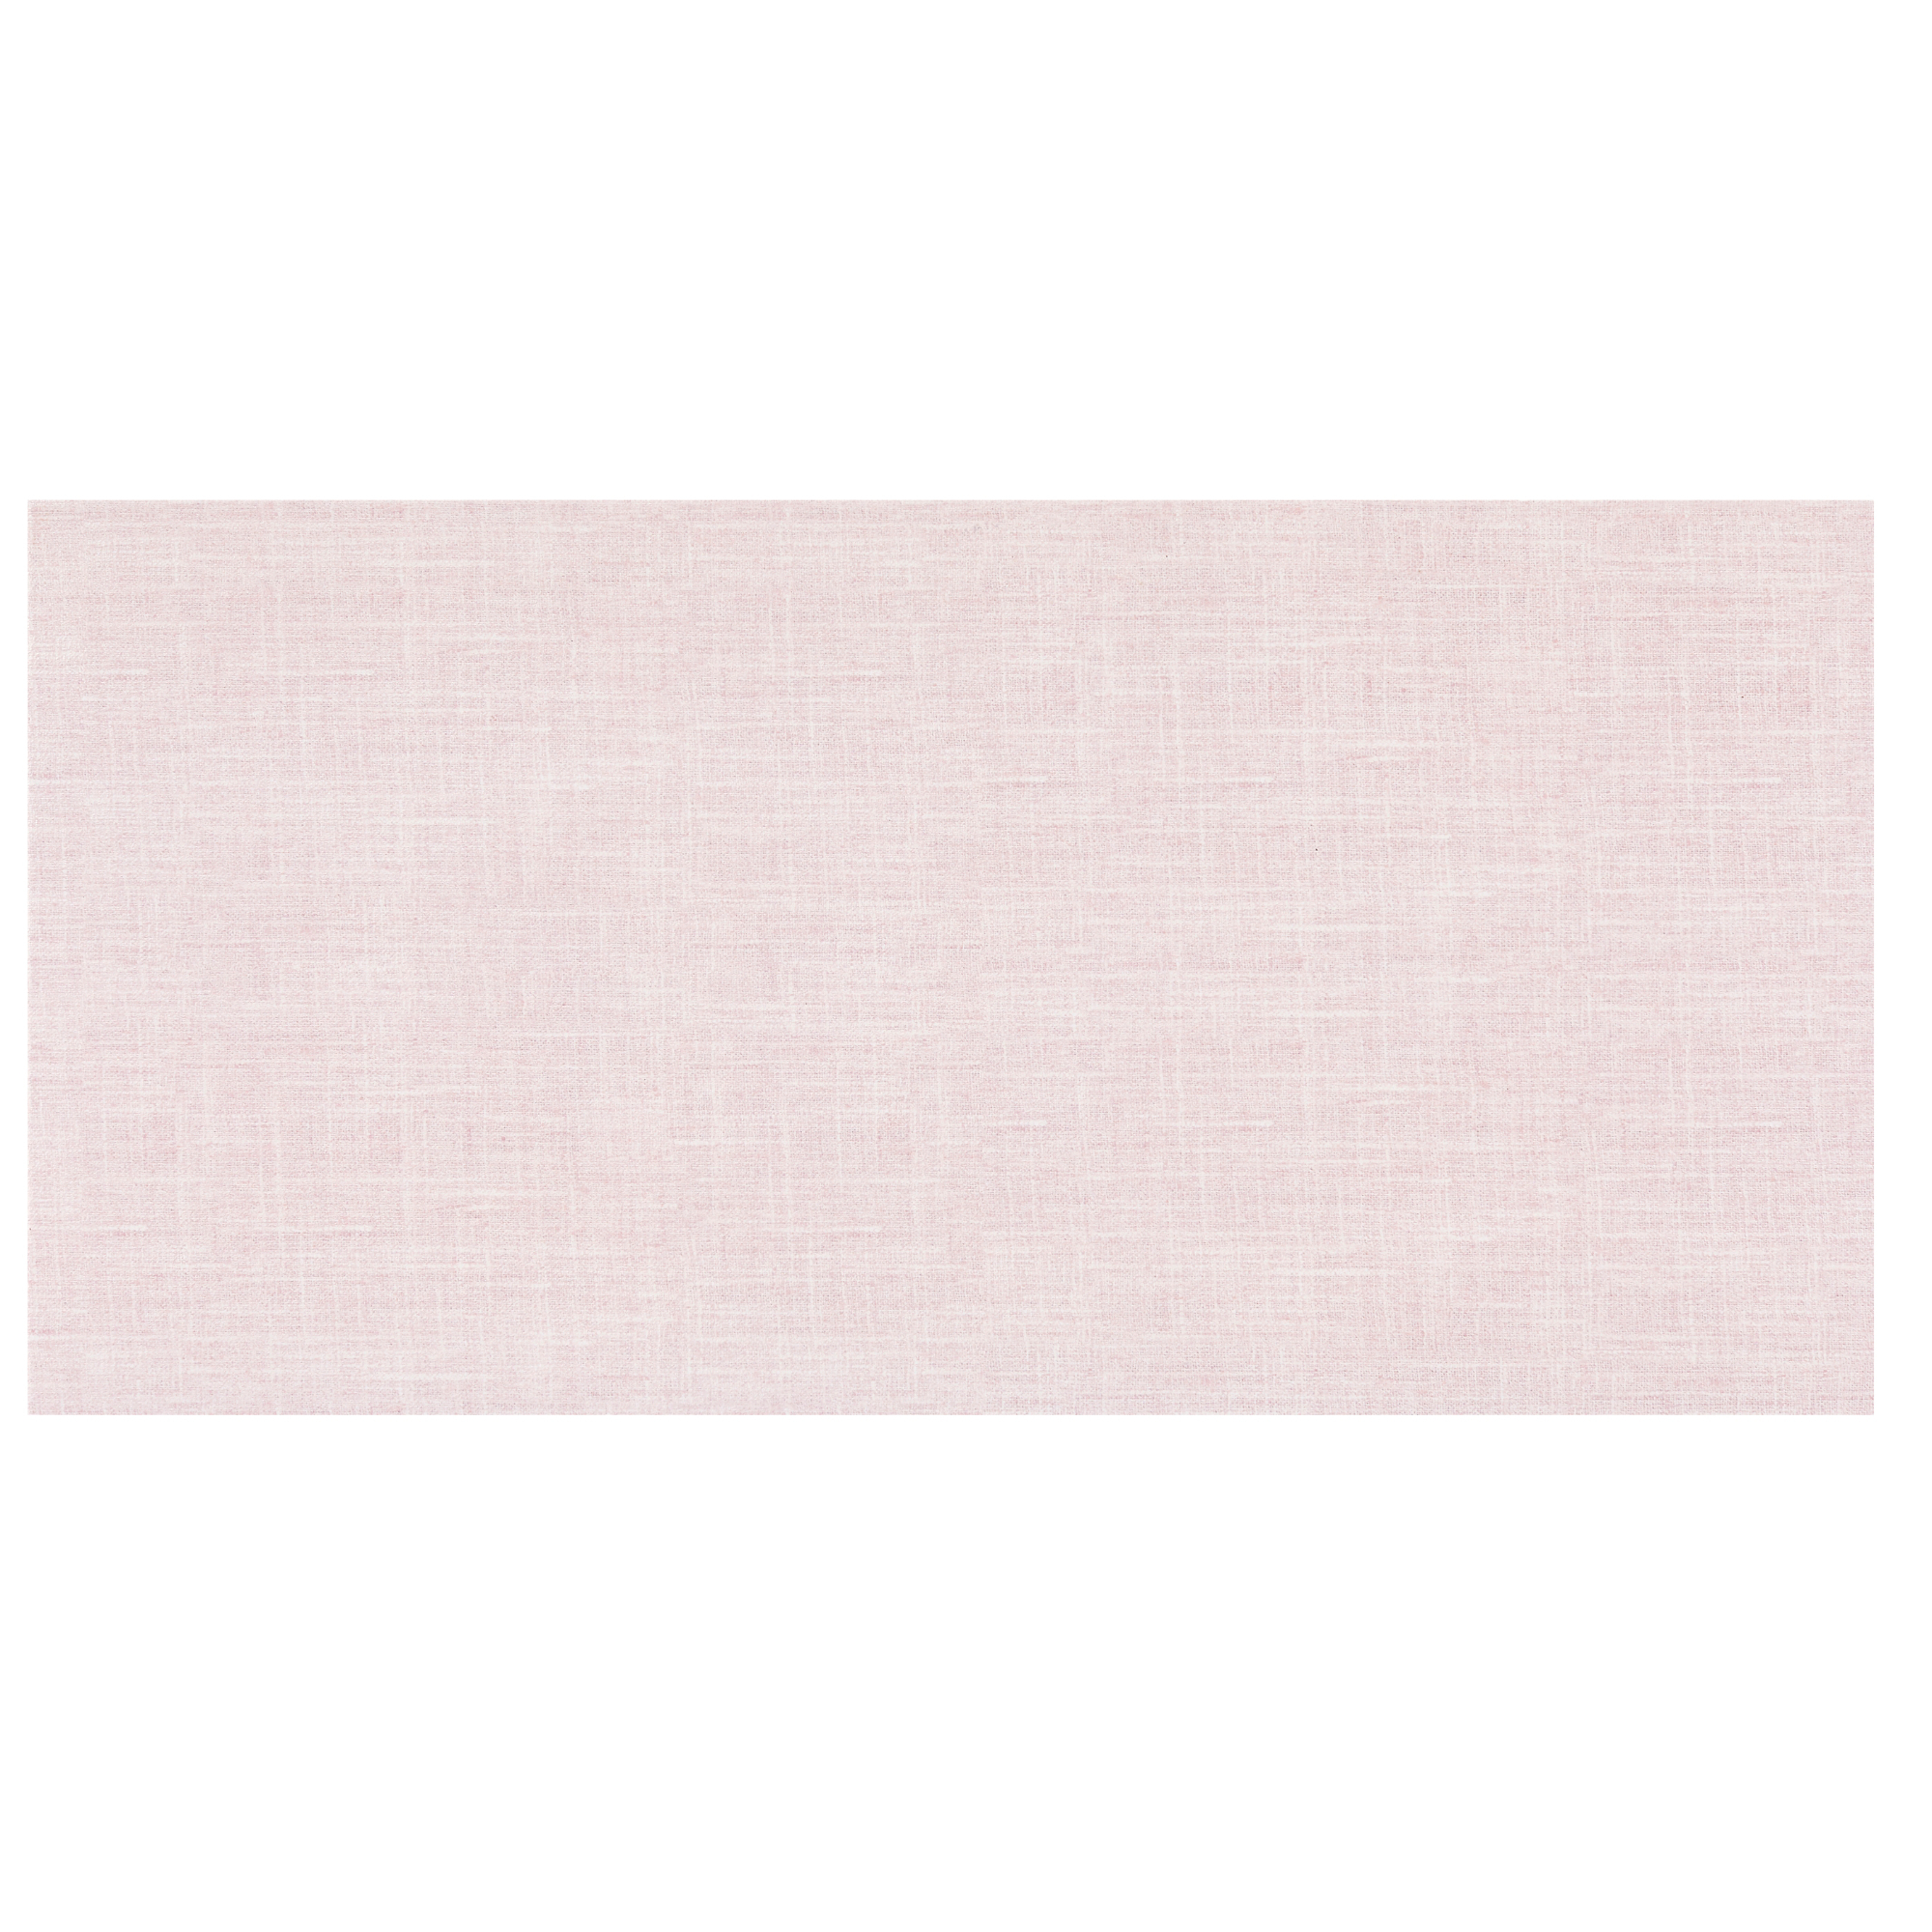 A. Selke Crosshatch Soft Pink31x63cm